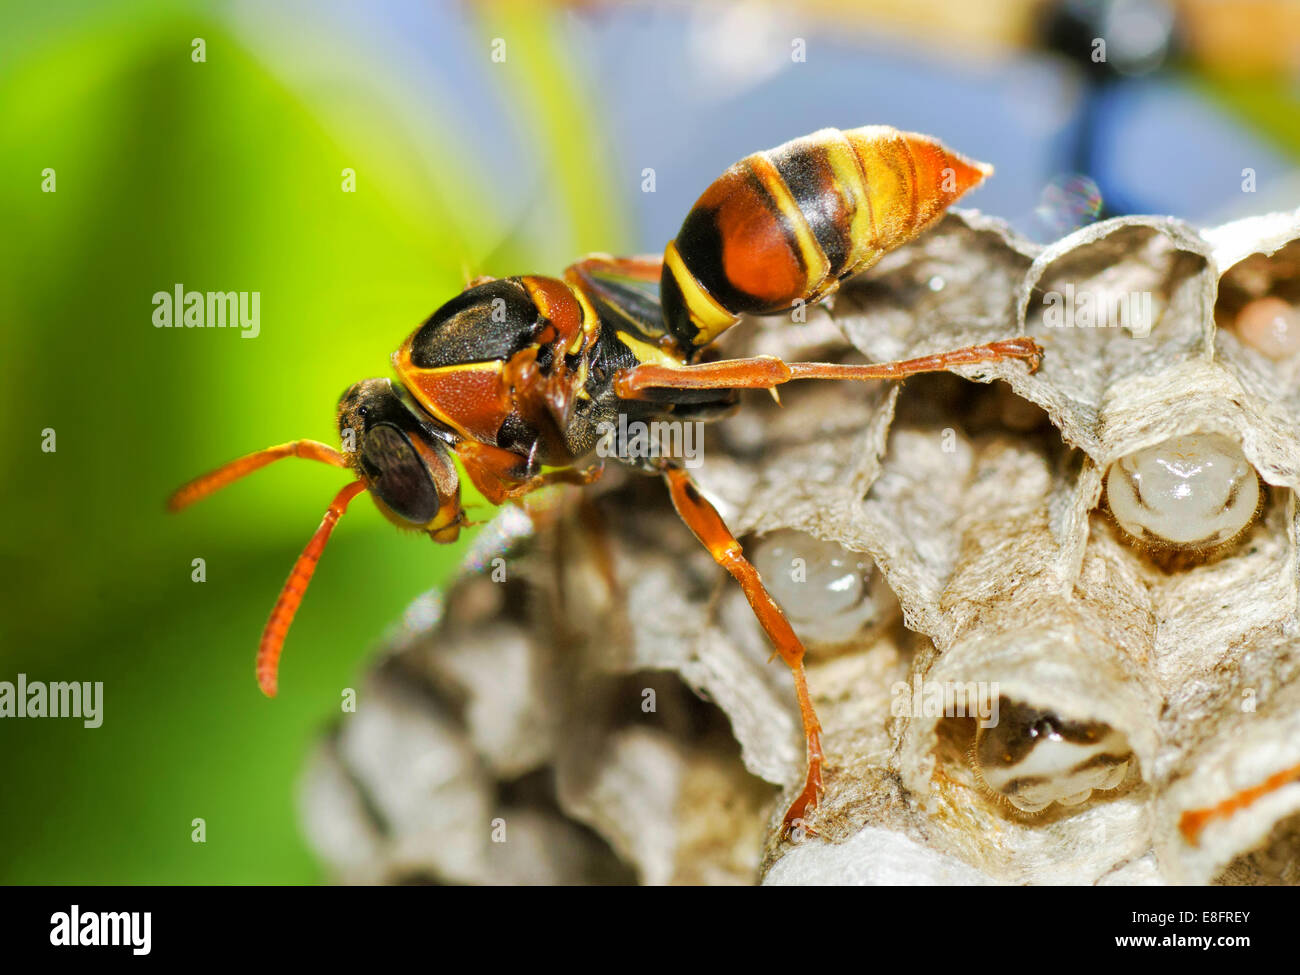 Australia, Western Australia, Perth, Wasp guarding hive Stock Photo